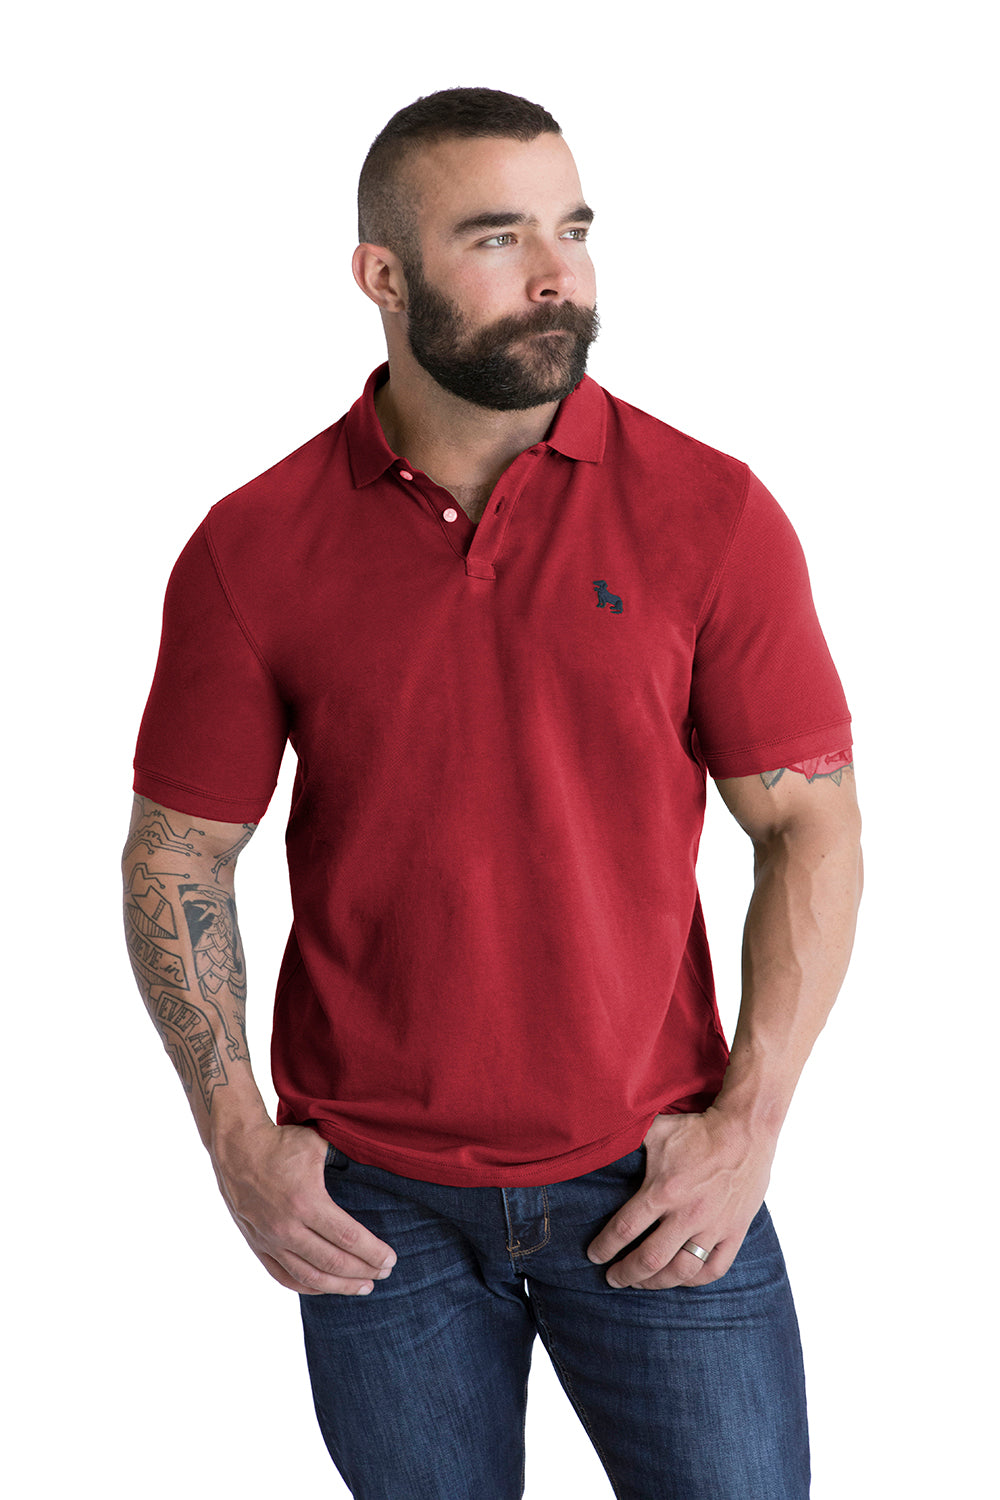 Cranberry Red Polo Shirt For Men – Blade + Blue